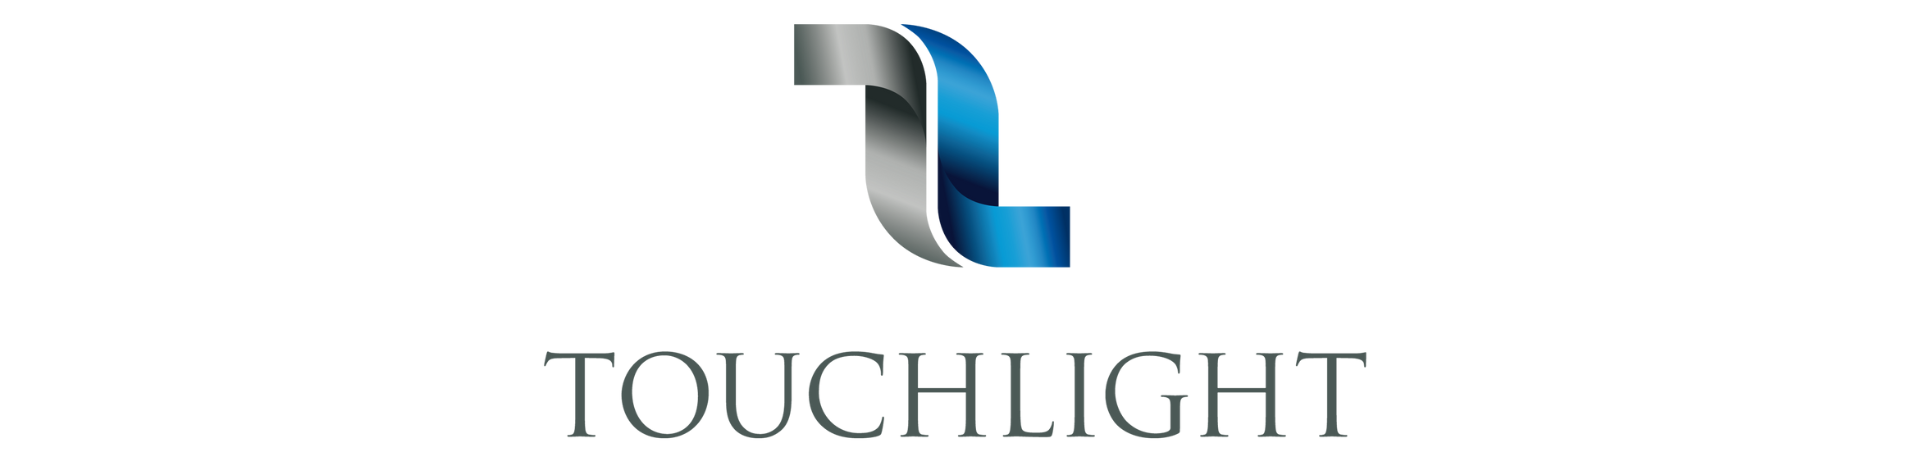 Touchlight Logo